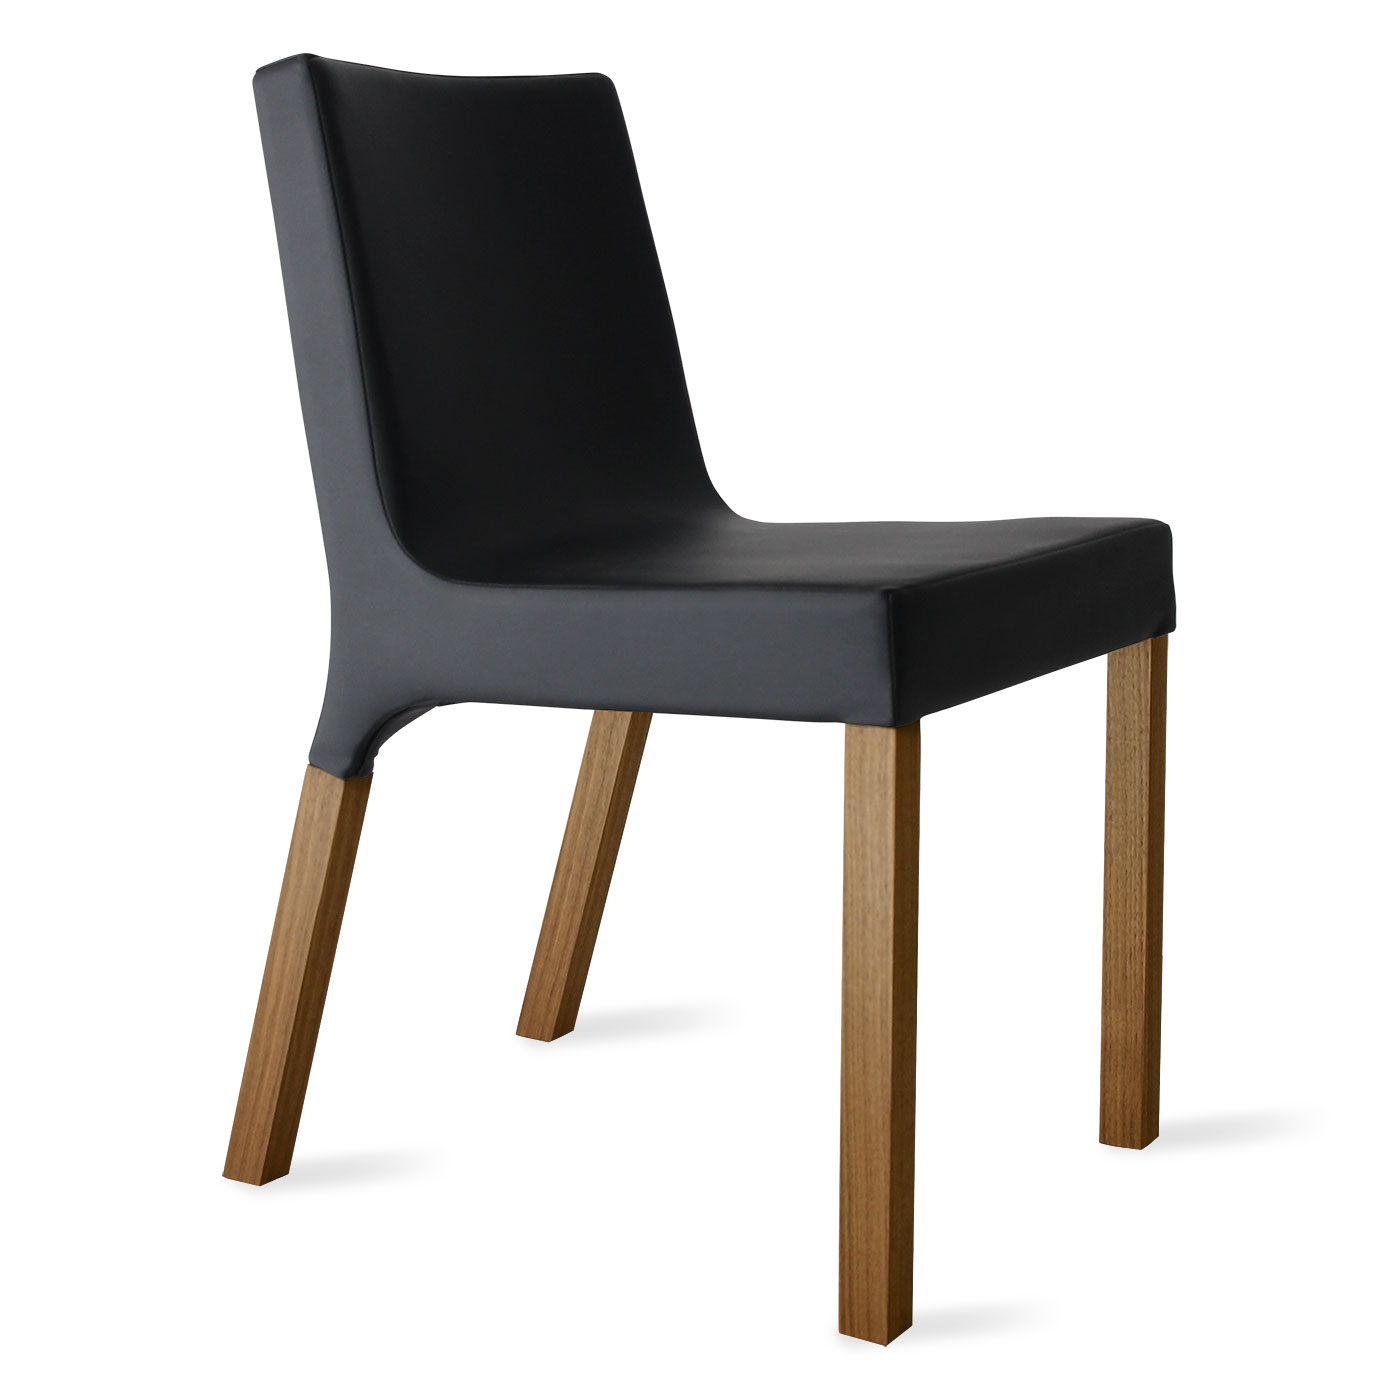 modern chairs knicker chair GQNMEUZ